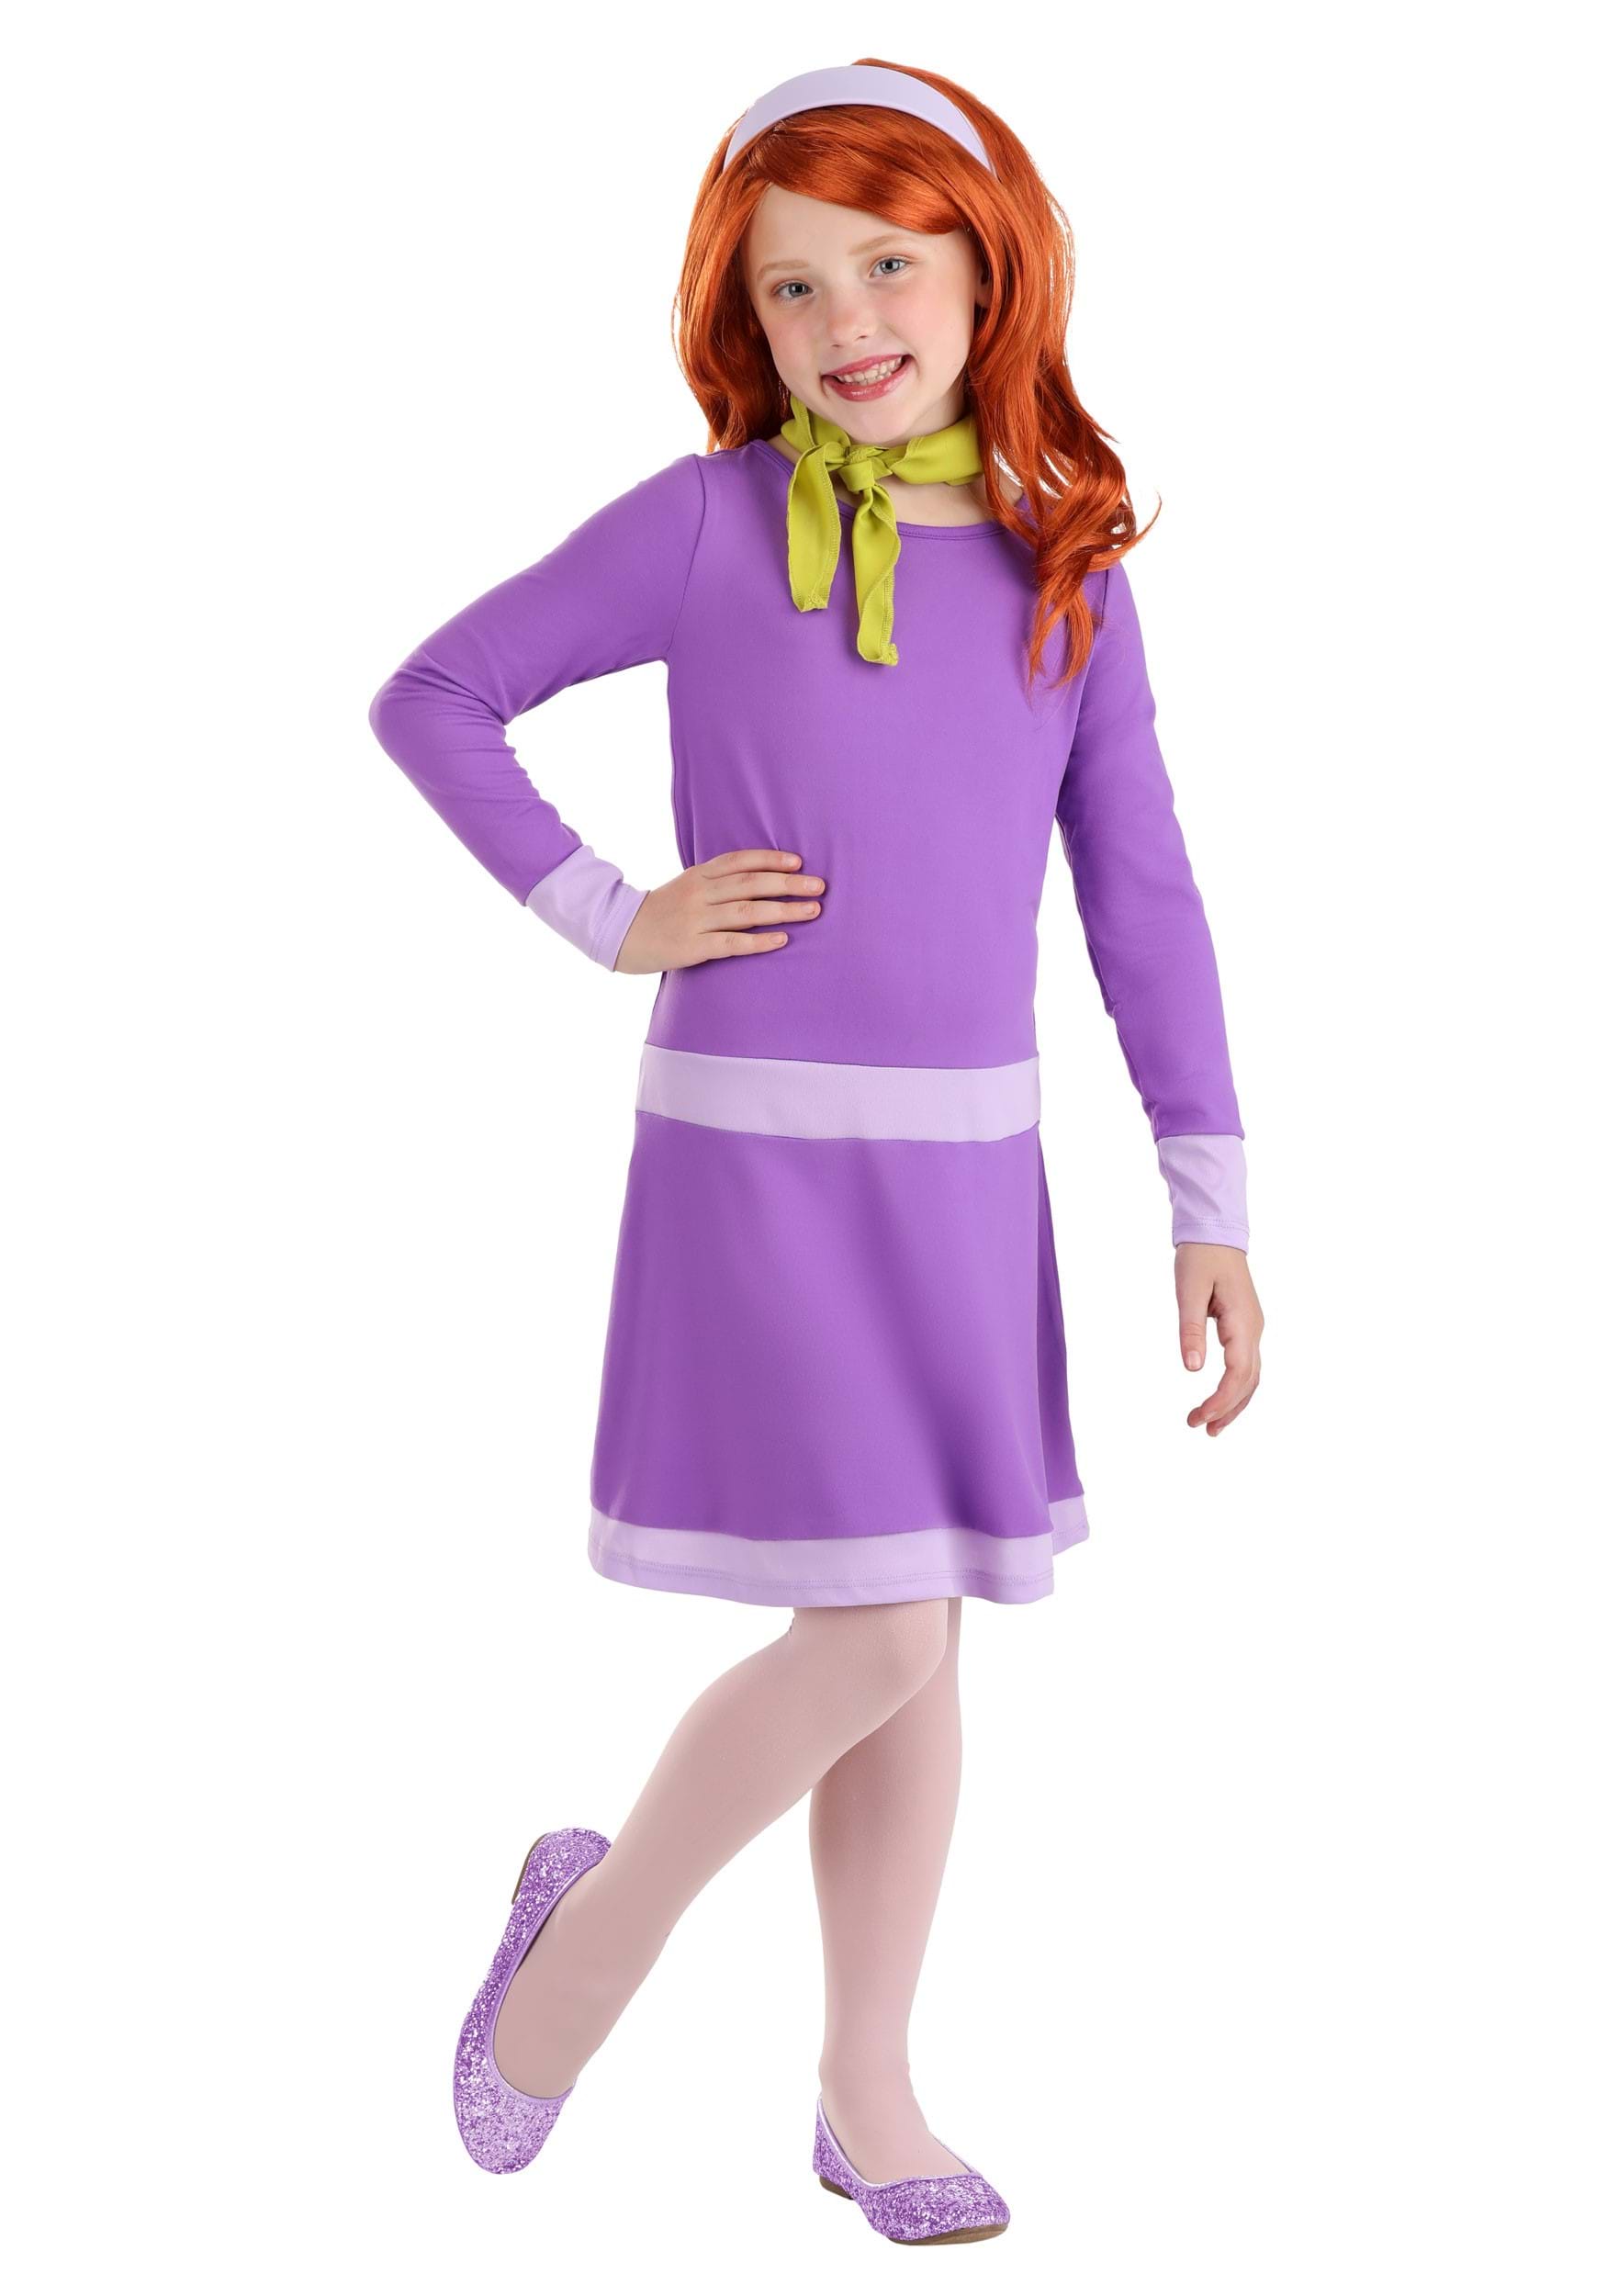 Photos - Fancy Dress FUN Costumes Scooby Doo Kid's Daphne Costume | Exclusive Girl's Costumes G